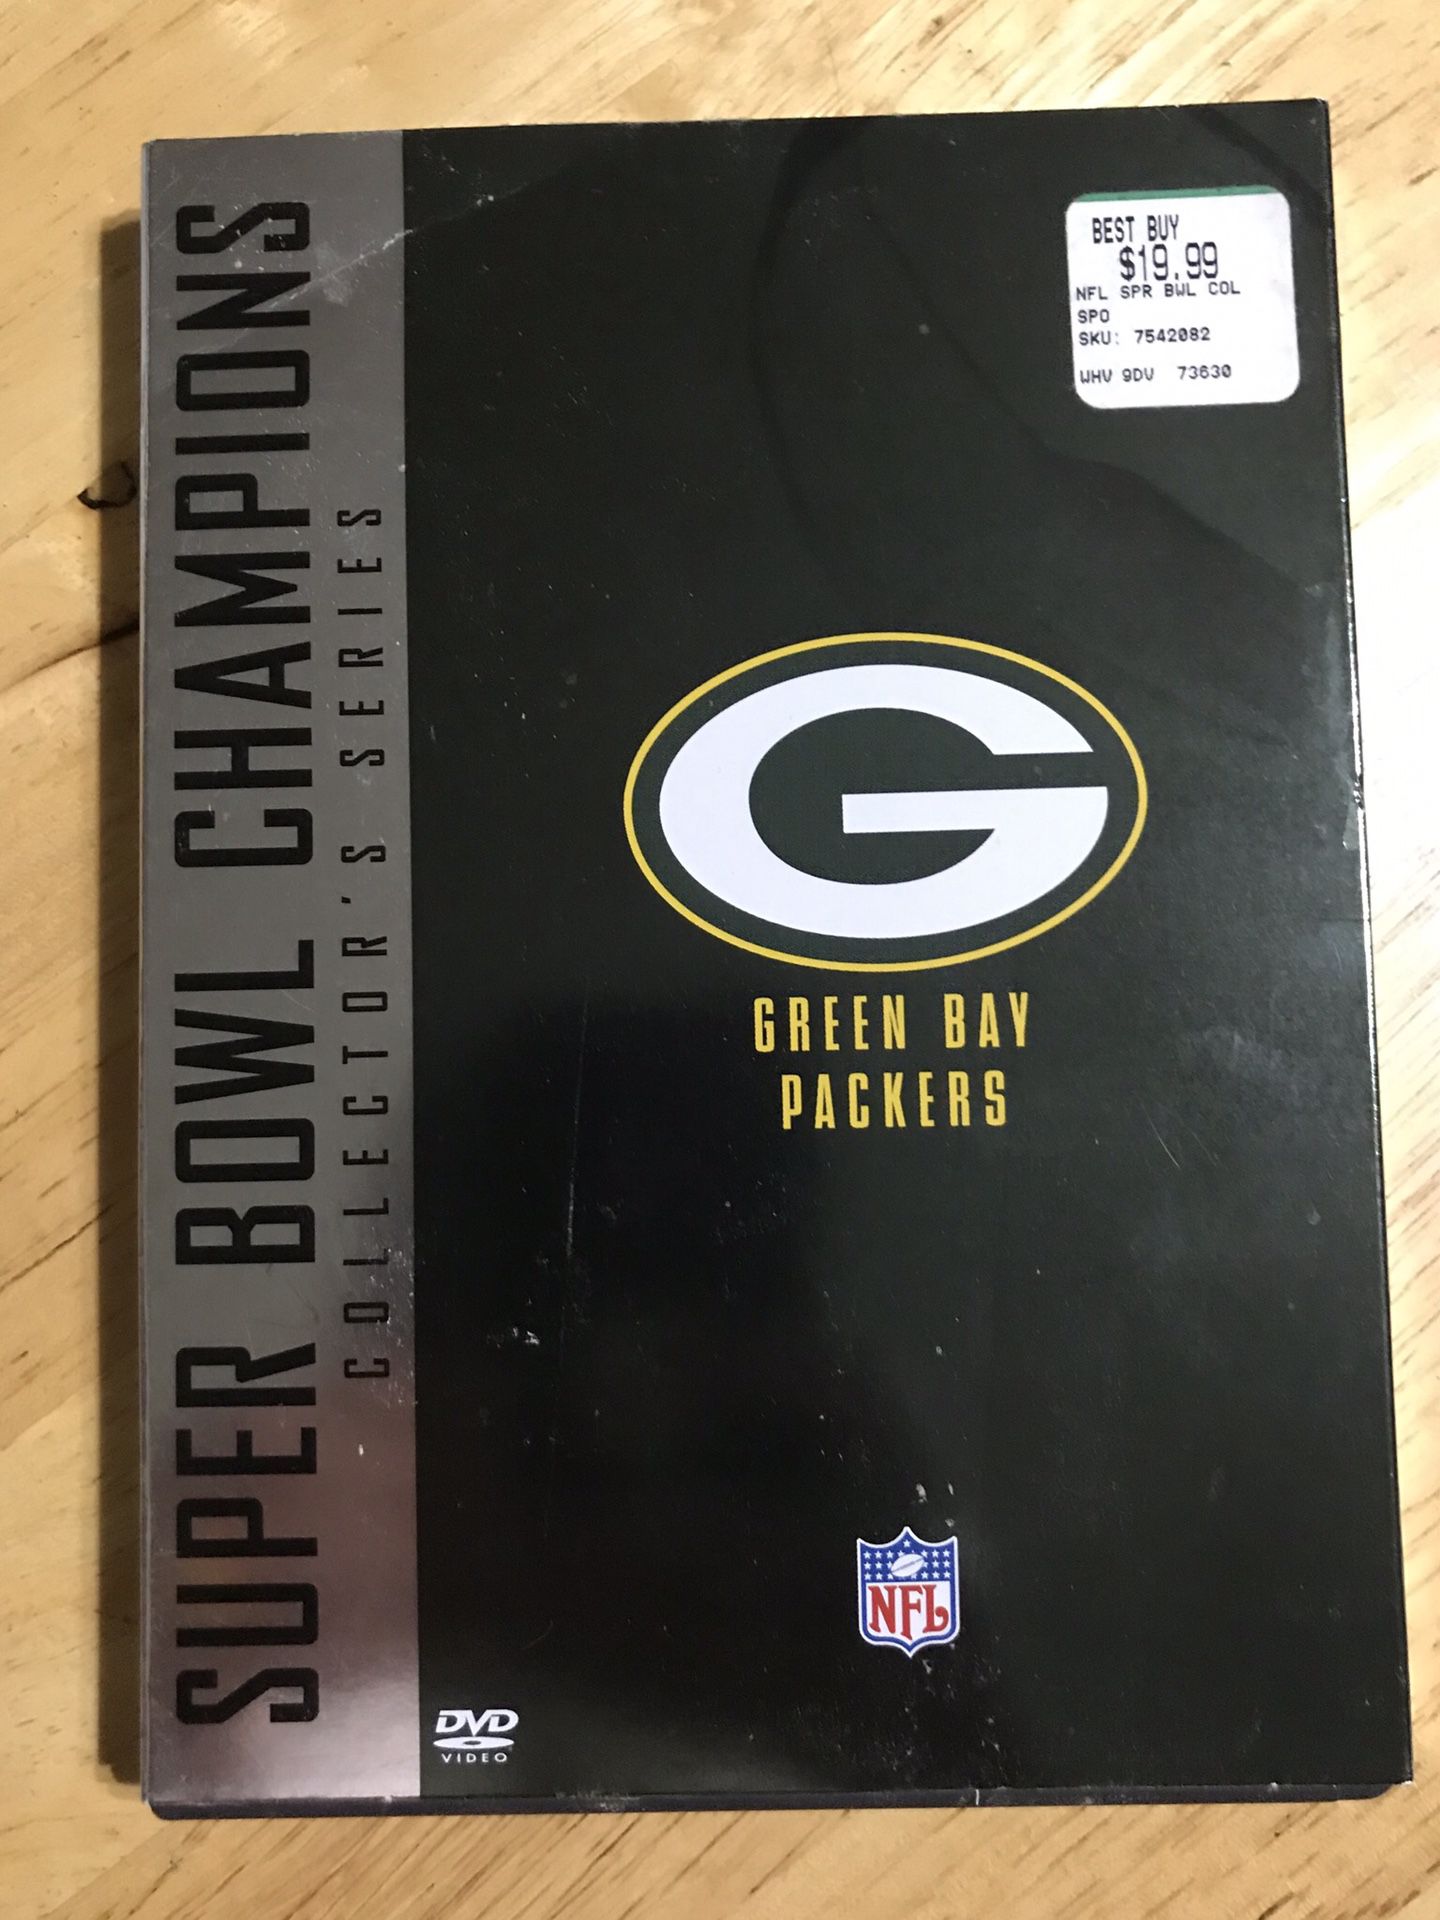 Green Bay Packers DVD set